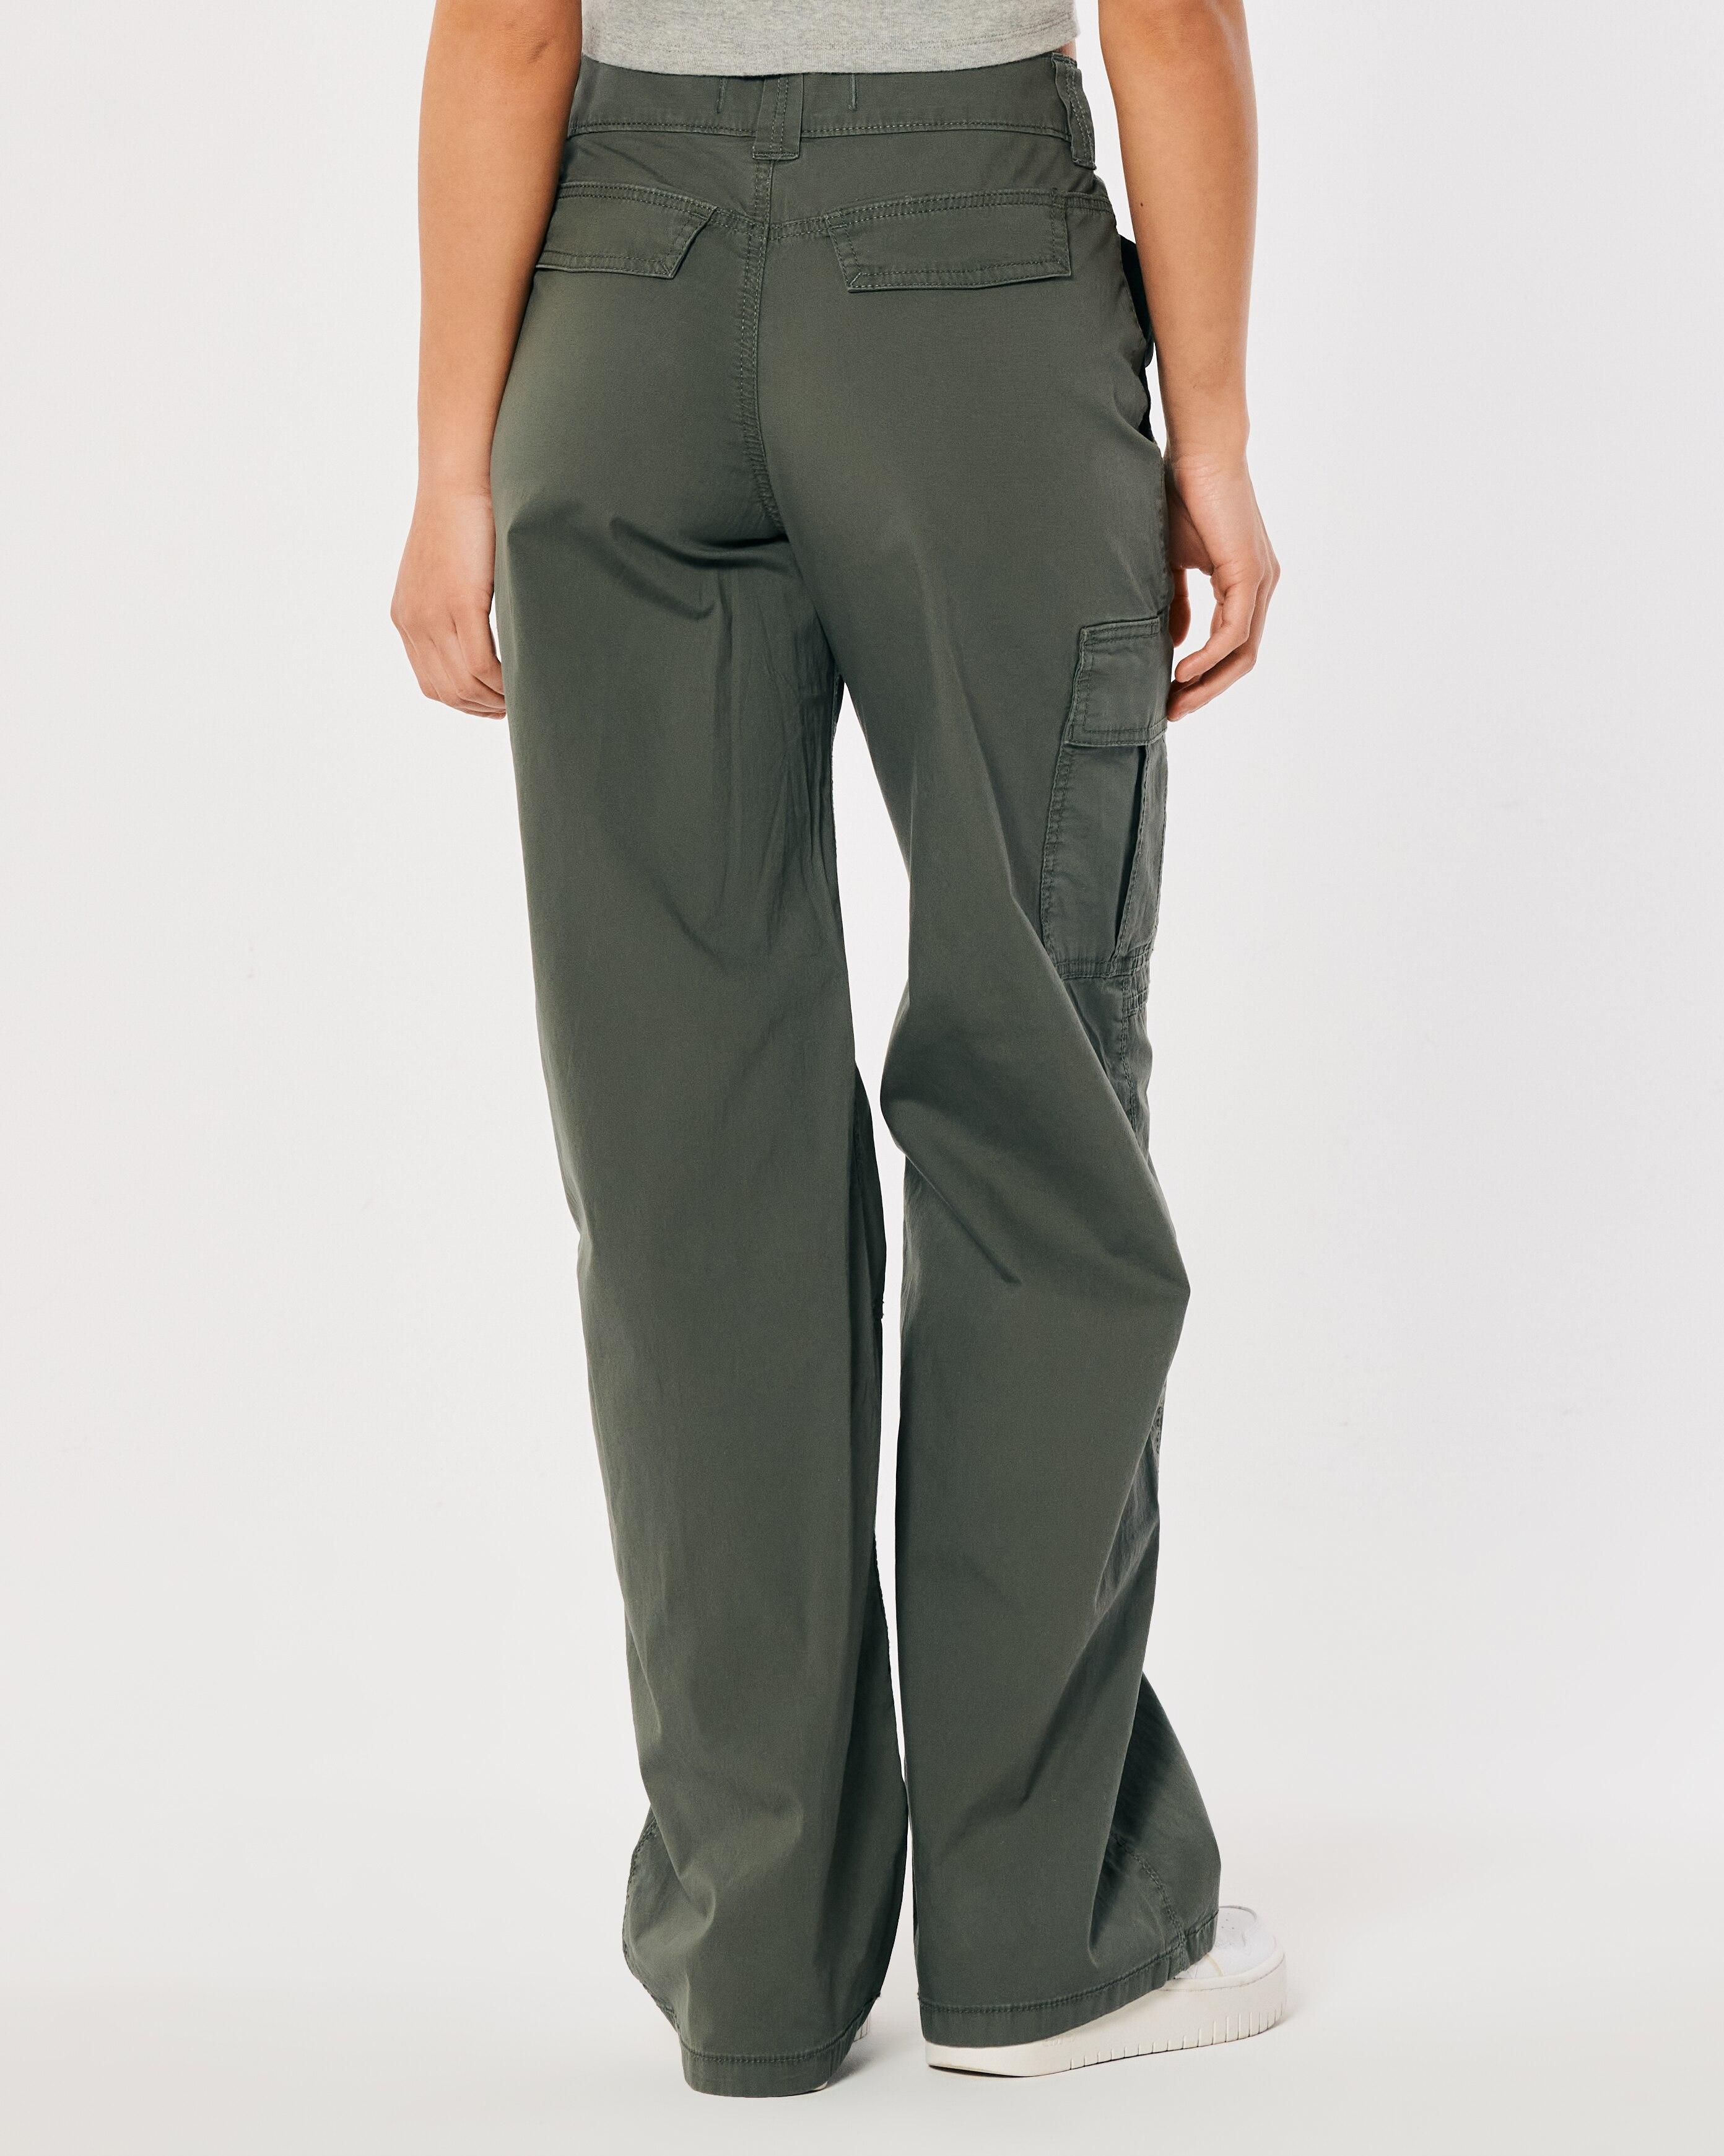 Hollister Pants Womens 0 Cargo Denim Green High Rise Super Skinny Stretch   eBay